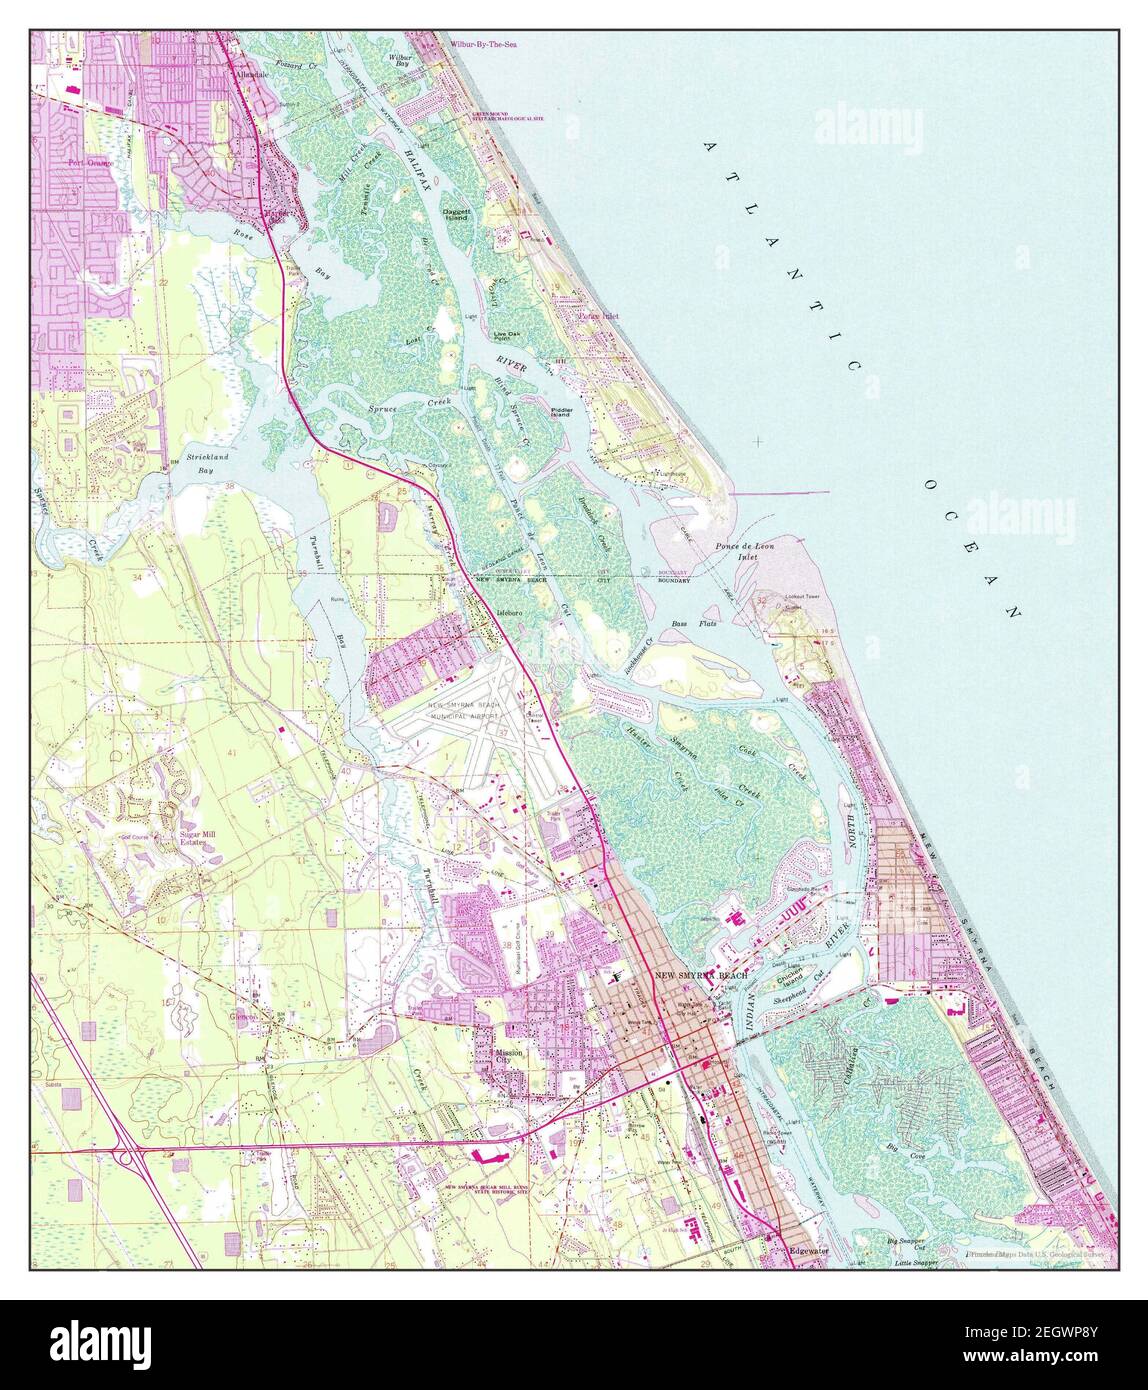 New Smyrna Beach Florida Map 1956 1 United States Of America By Timeless Maps Data U S Geological Survey Stock Photo Alamy